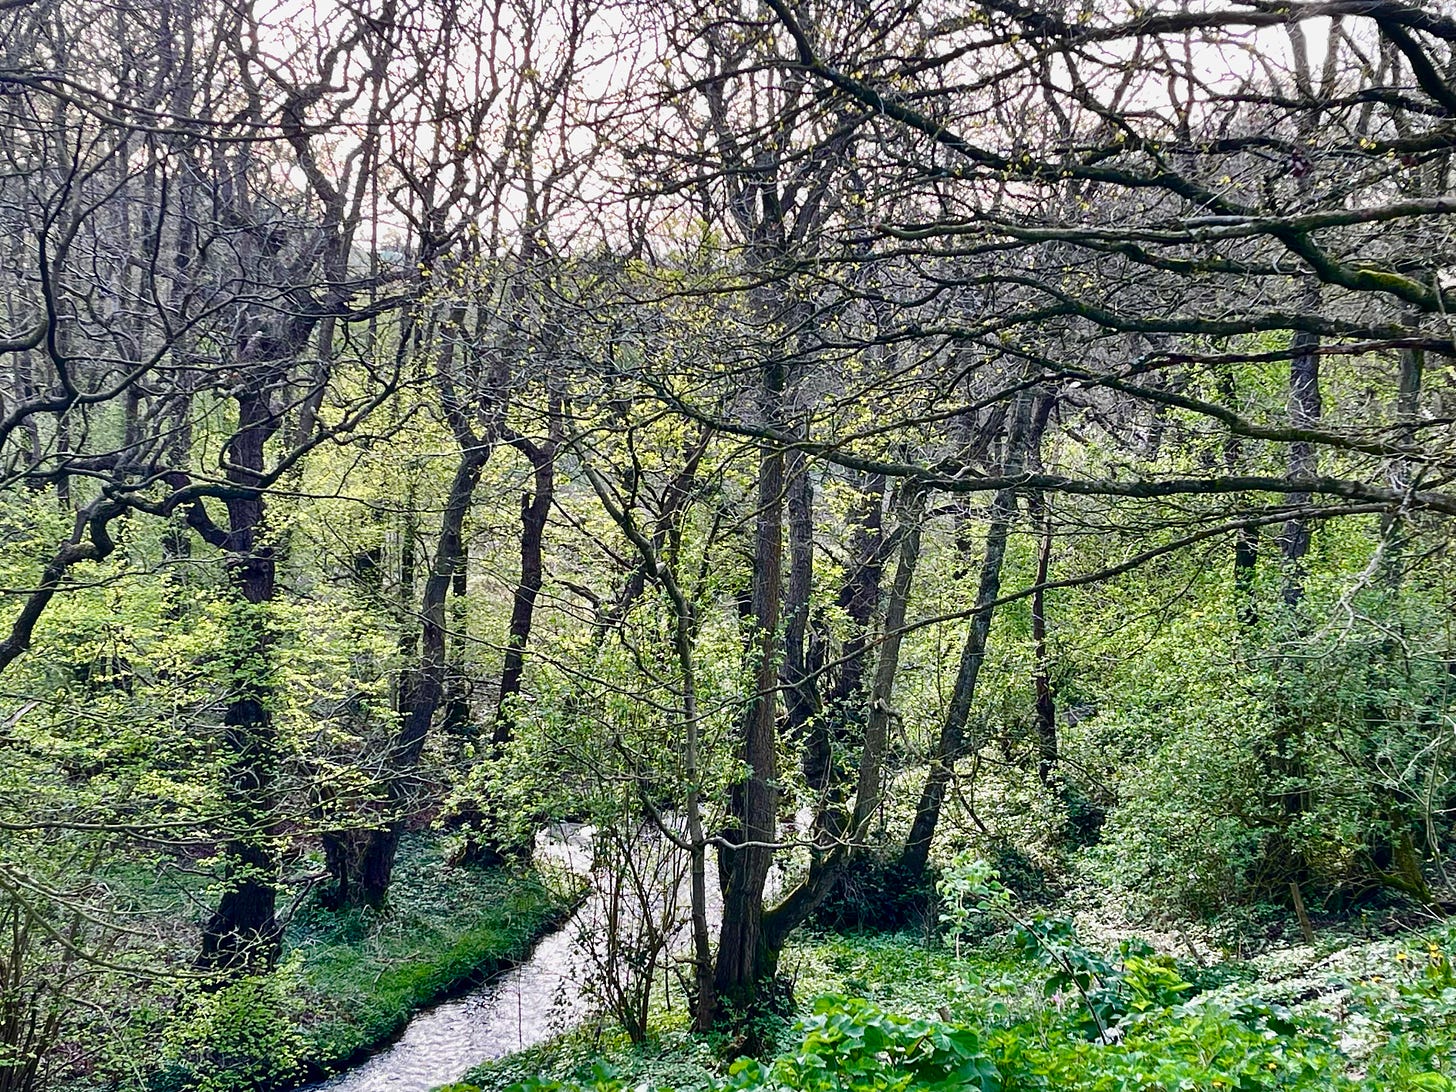 Wild Stream in valley among Alder Trees